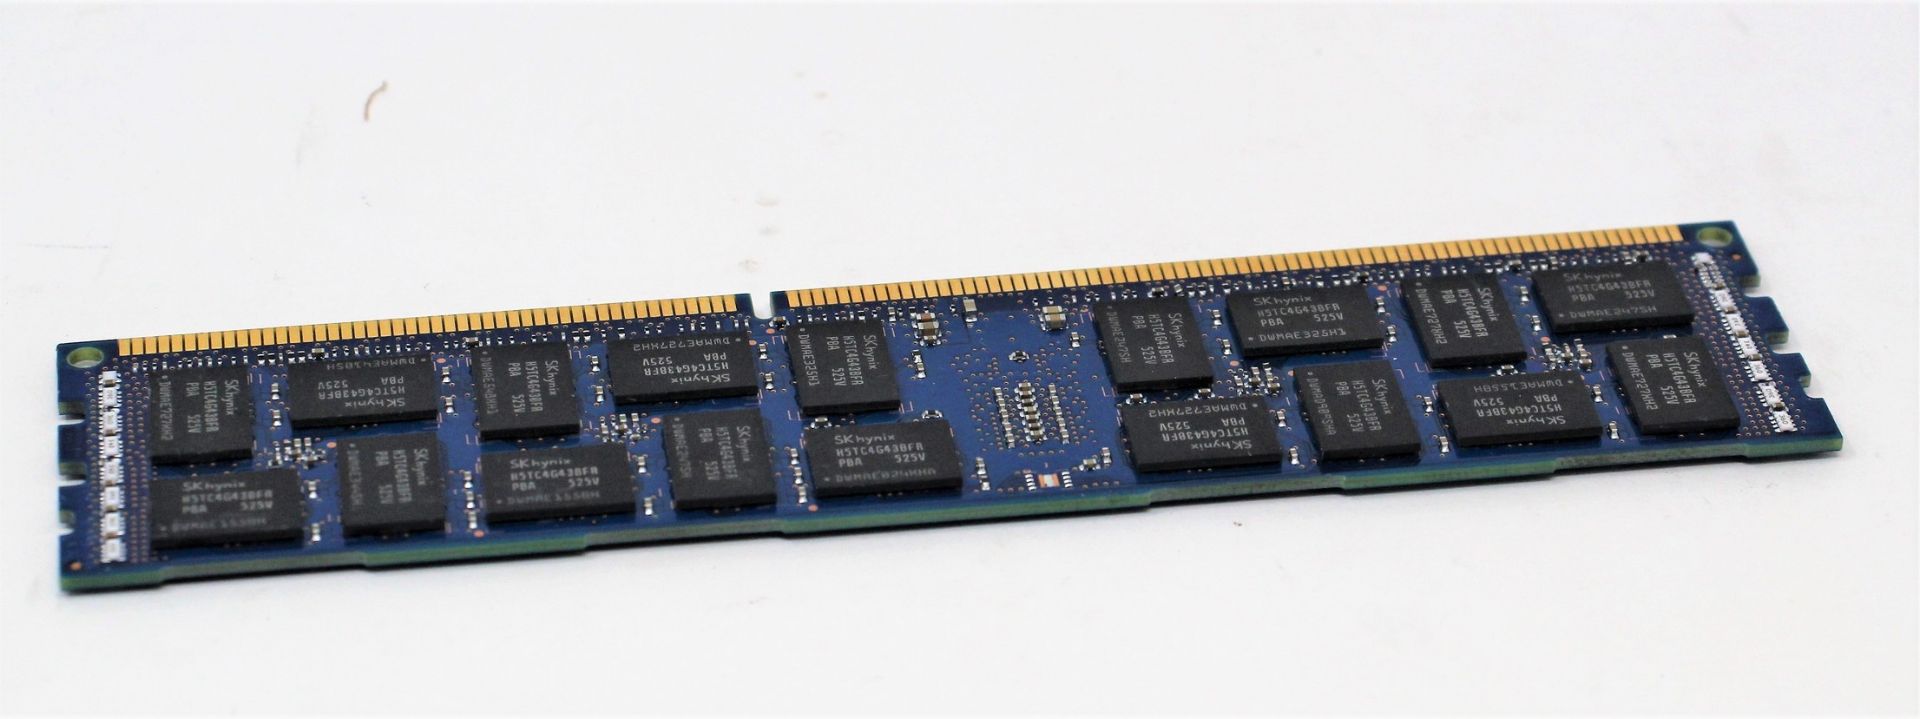 Twenty pre-owned Hynix 16GB 2RX4 PC3L-12800R DDR3 Server Memory Modules (P/N: HMT42GR7BFR4A-PB T8